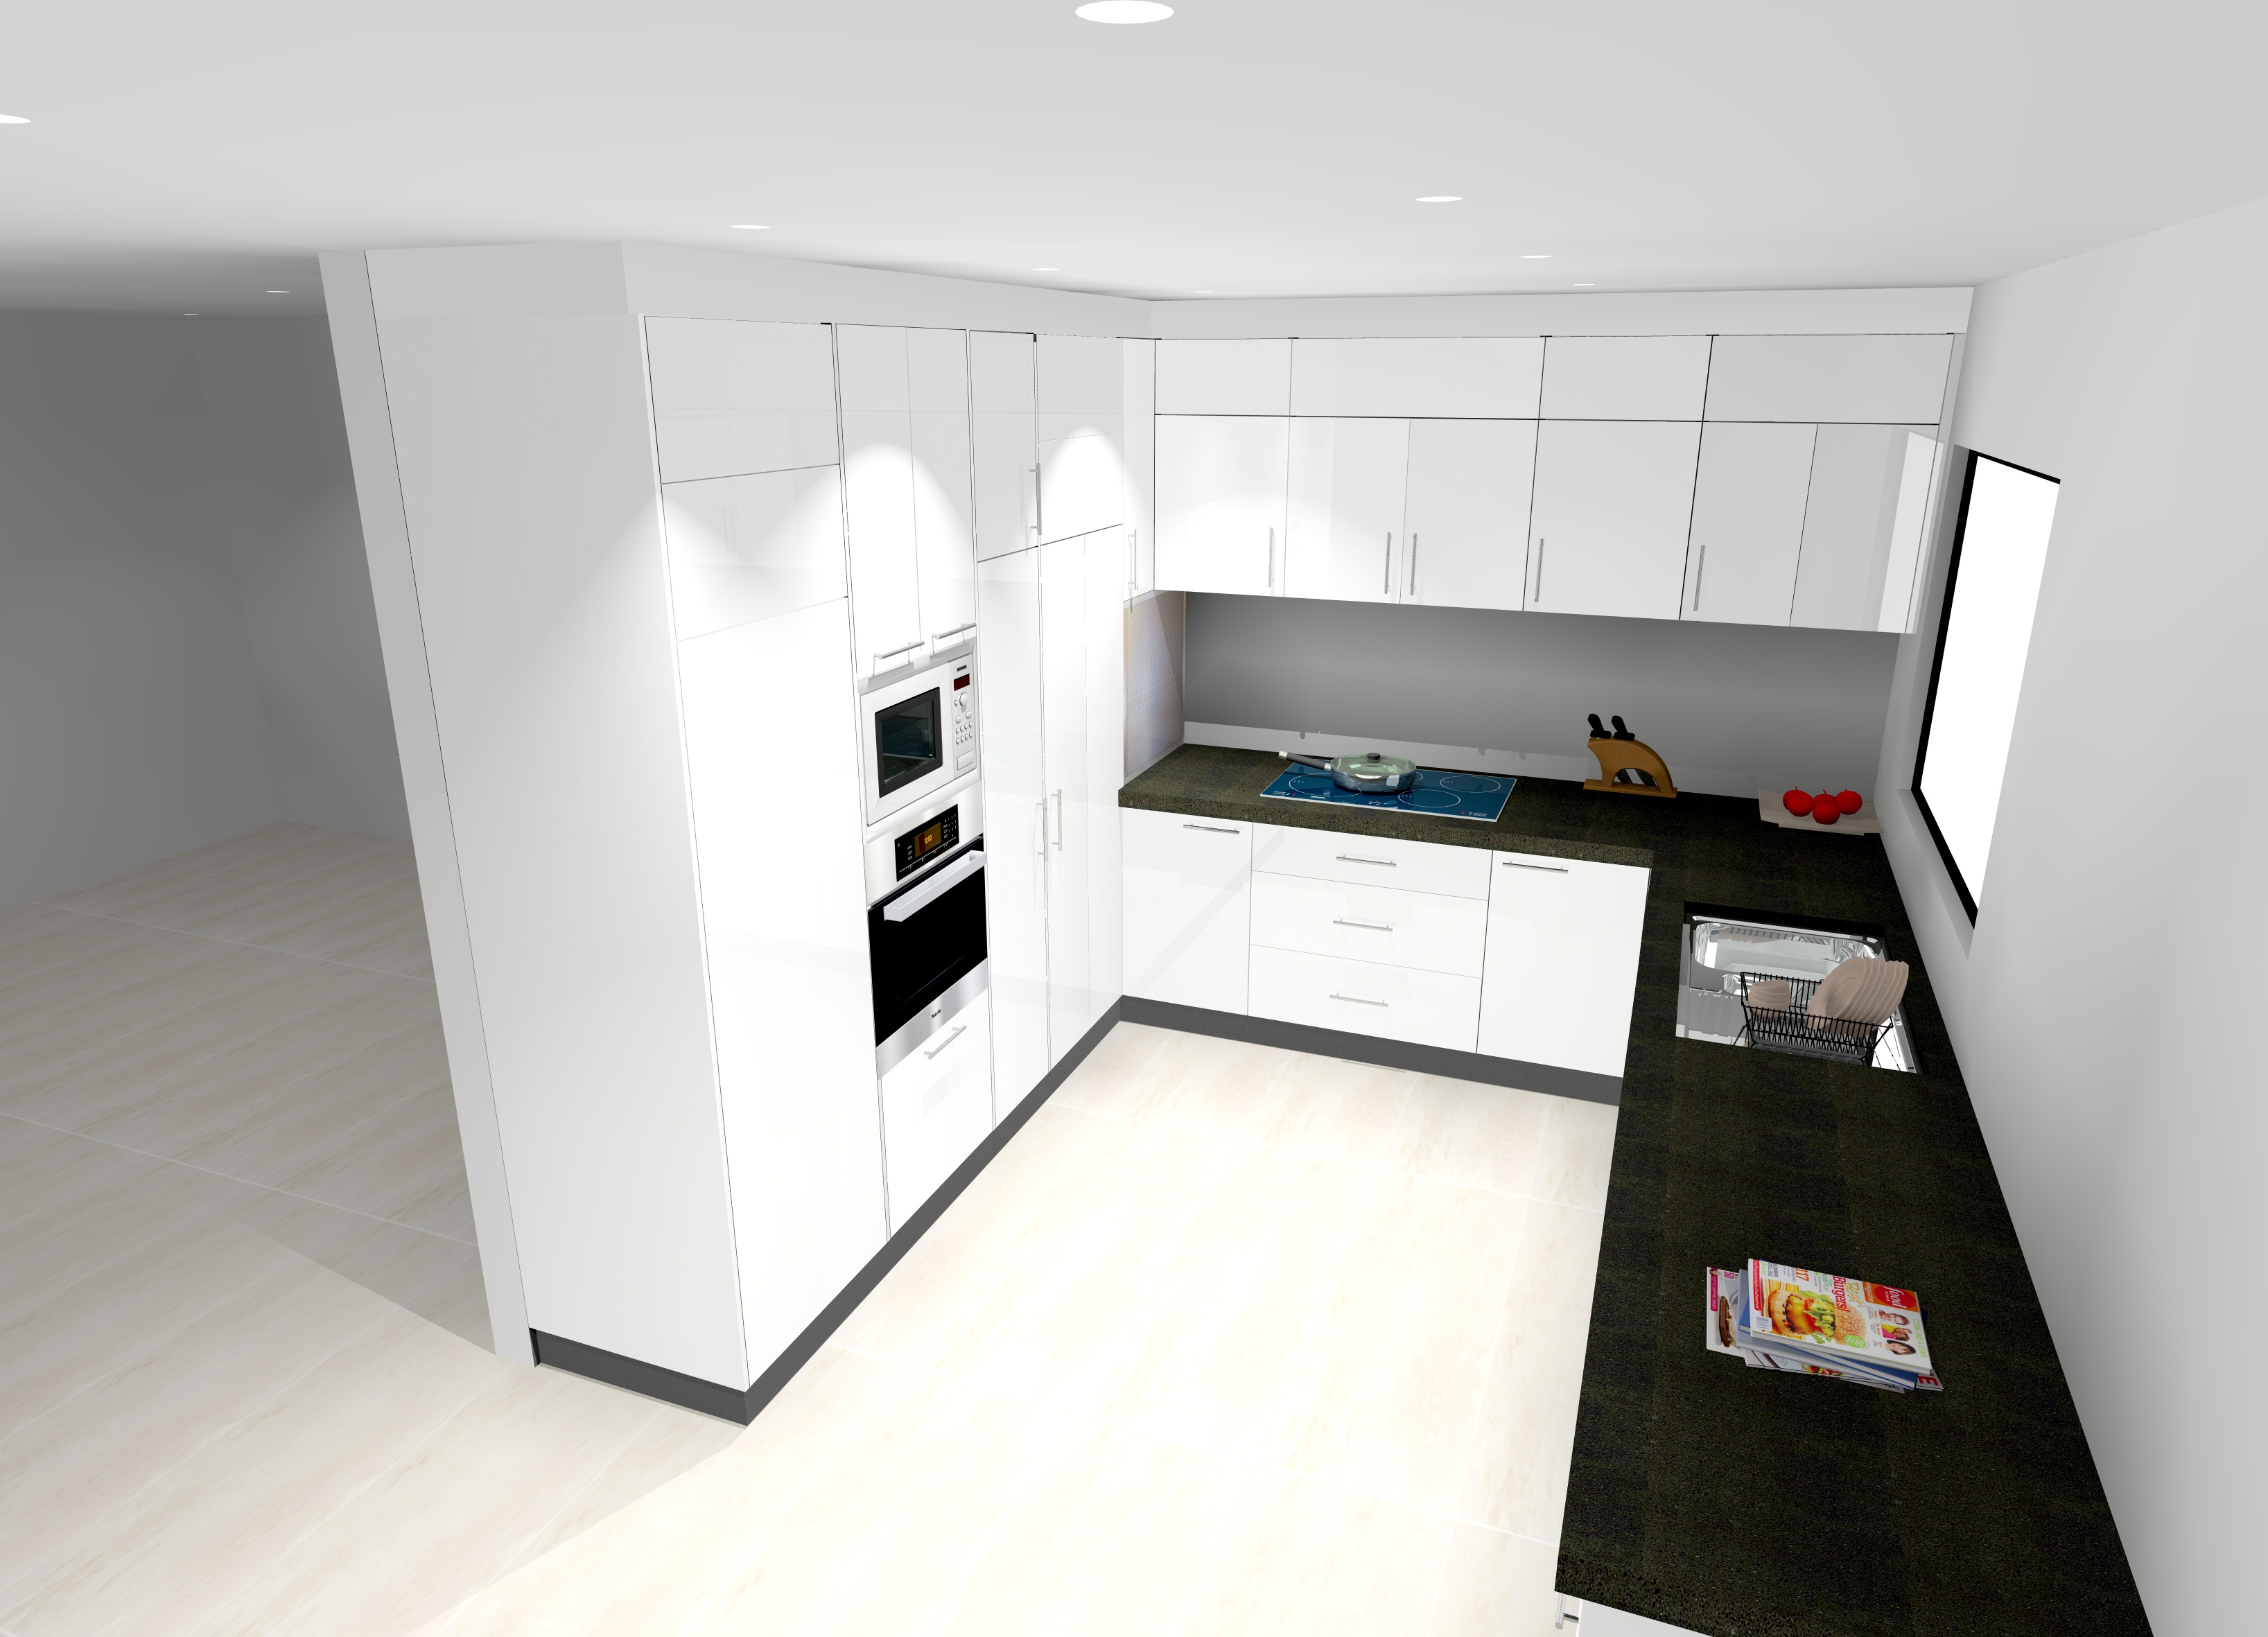 Kitchen Design Planning Tools – ICM Geelong